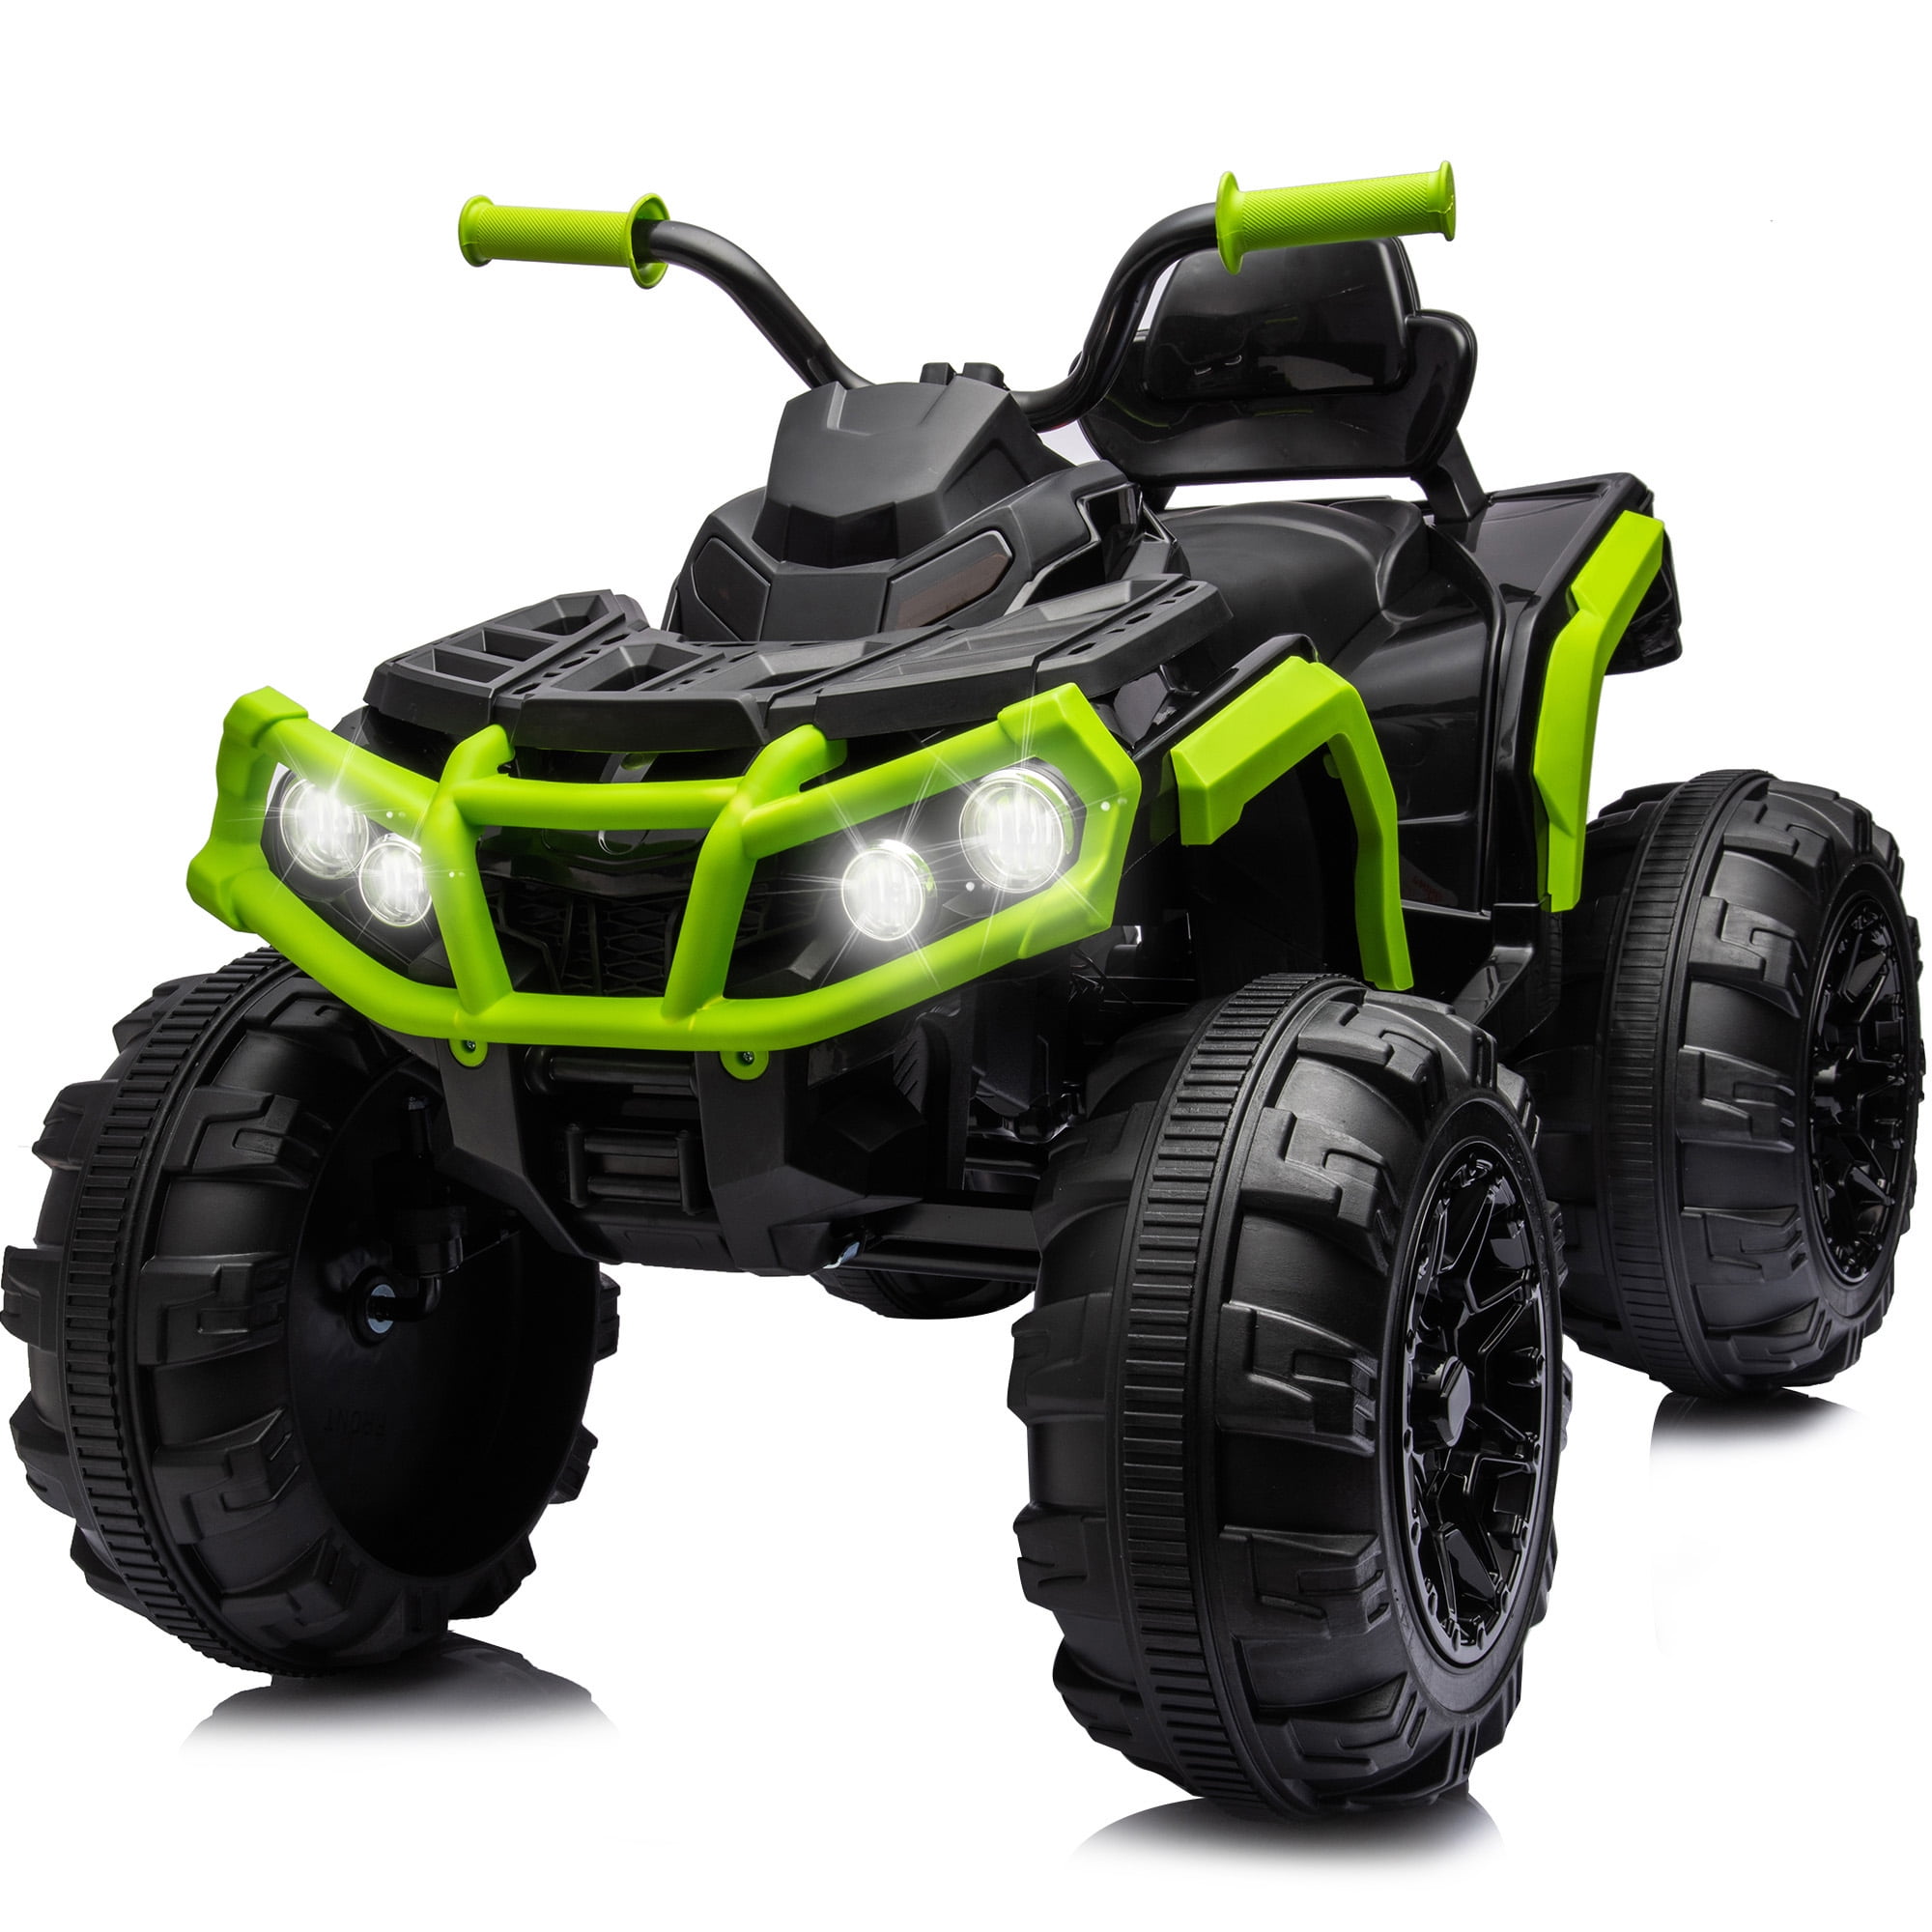 Outfunny 24V Kids 4 Wheeler, Electric ATV Quad Ride-on Toy for Big Kids ...